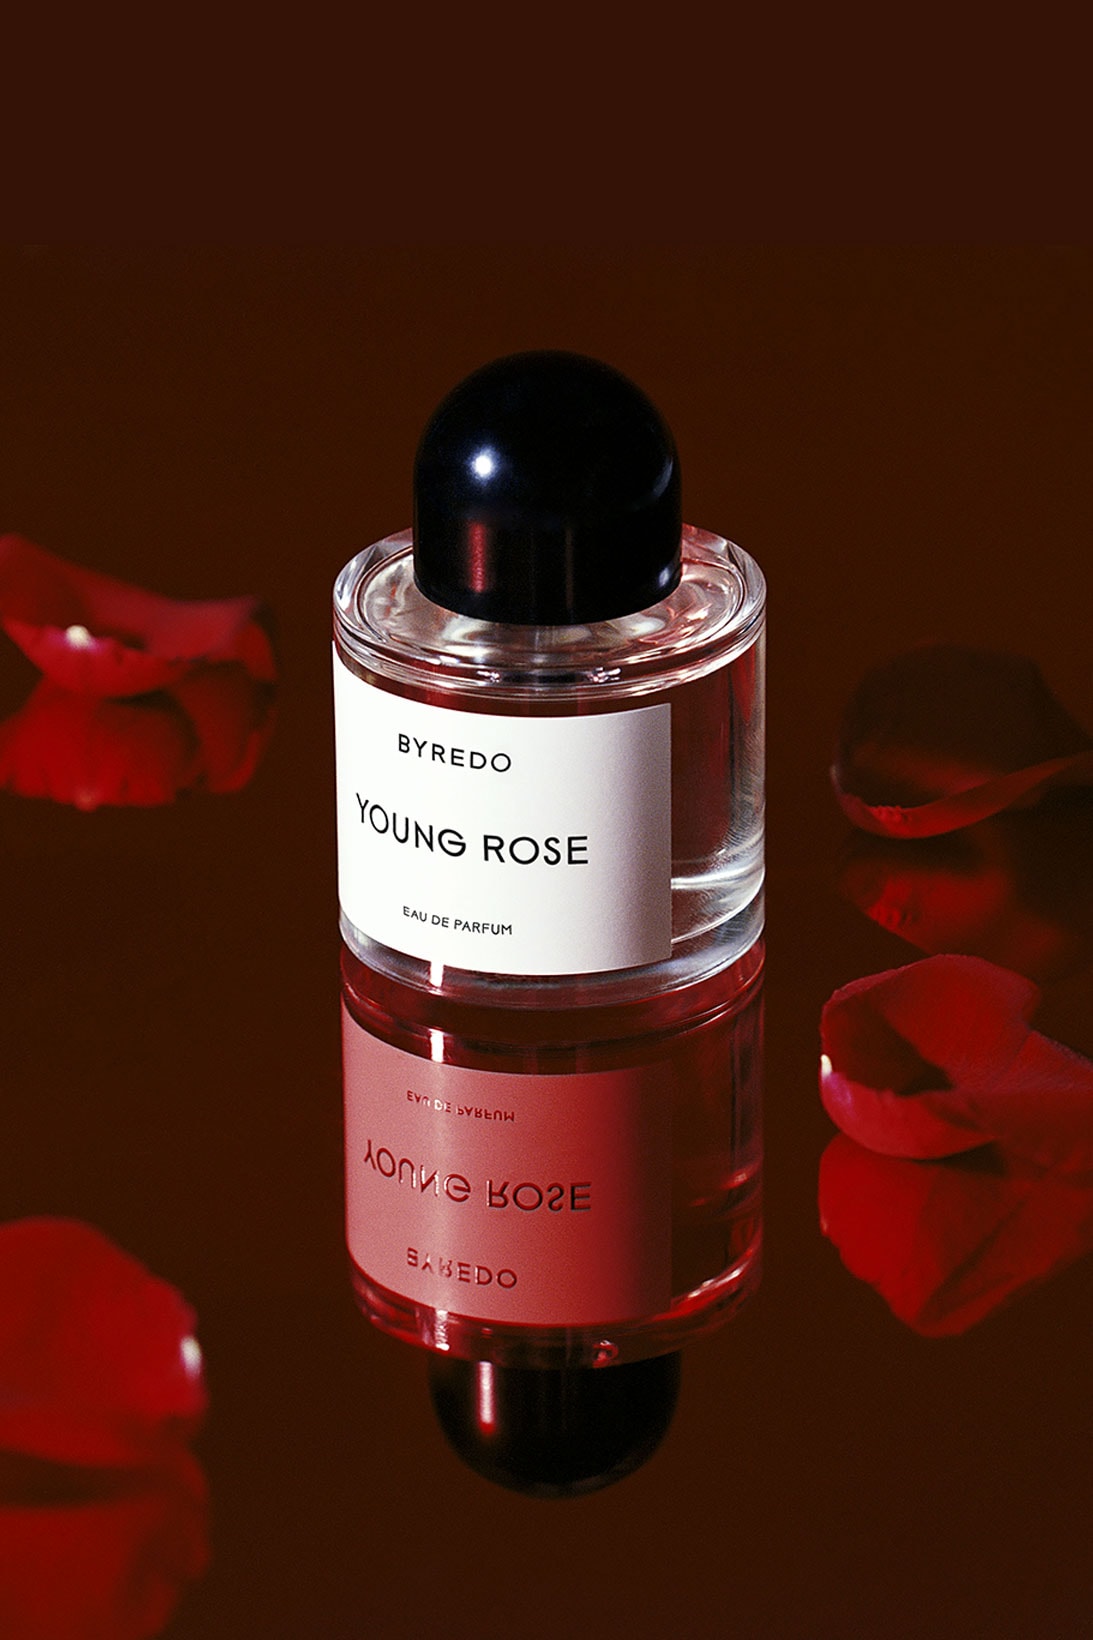 Byredo Young Rose Perfume Fragrance Bottle Flower Petals